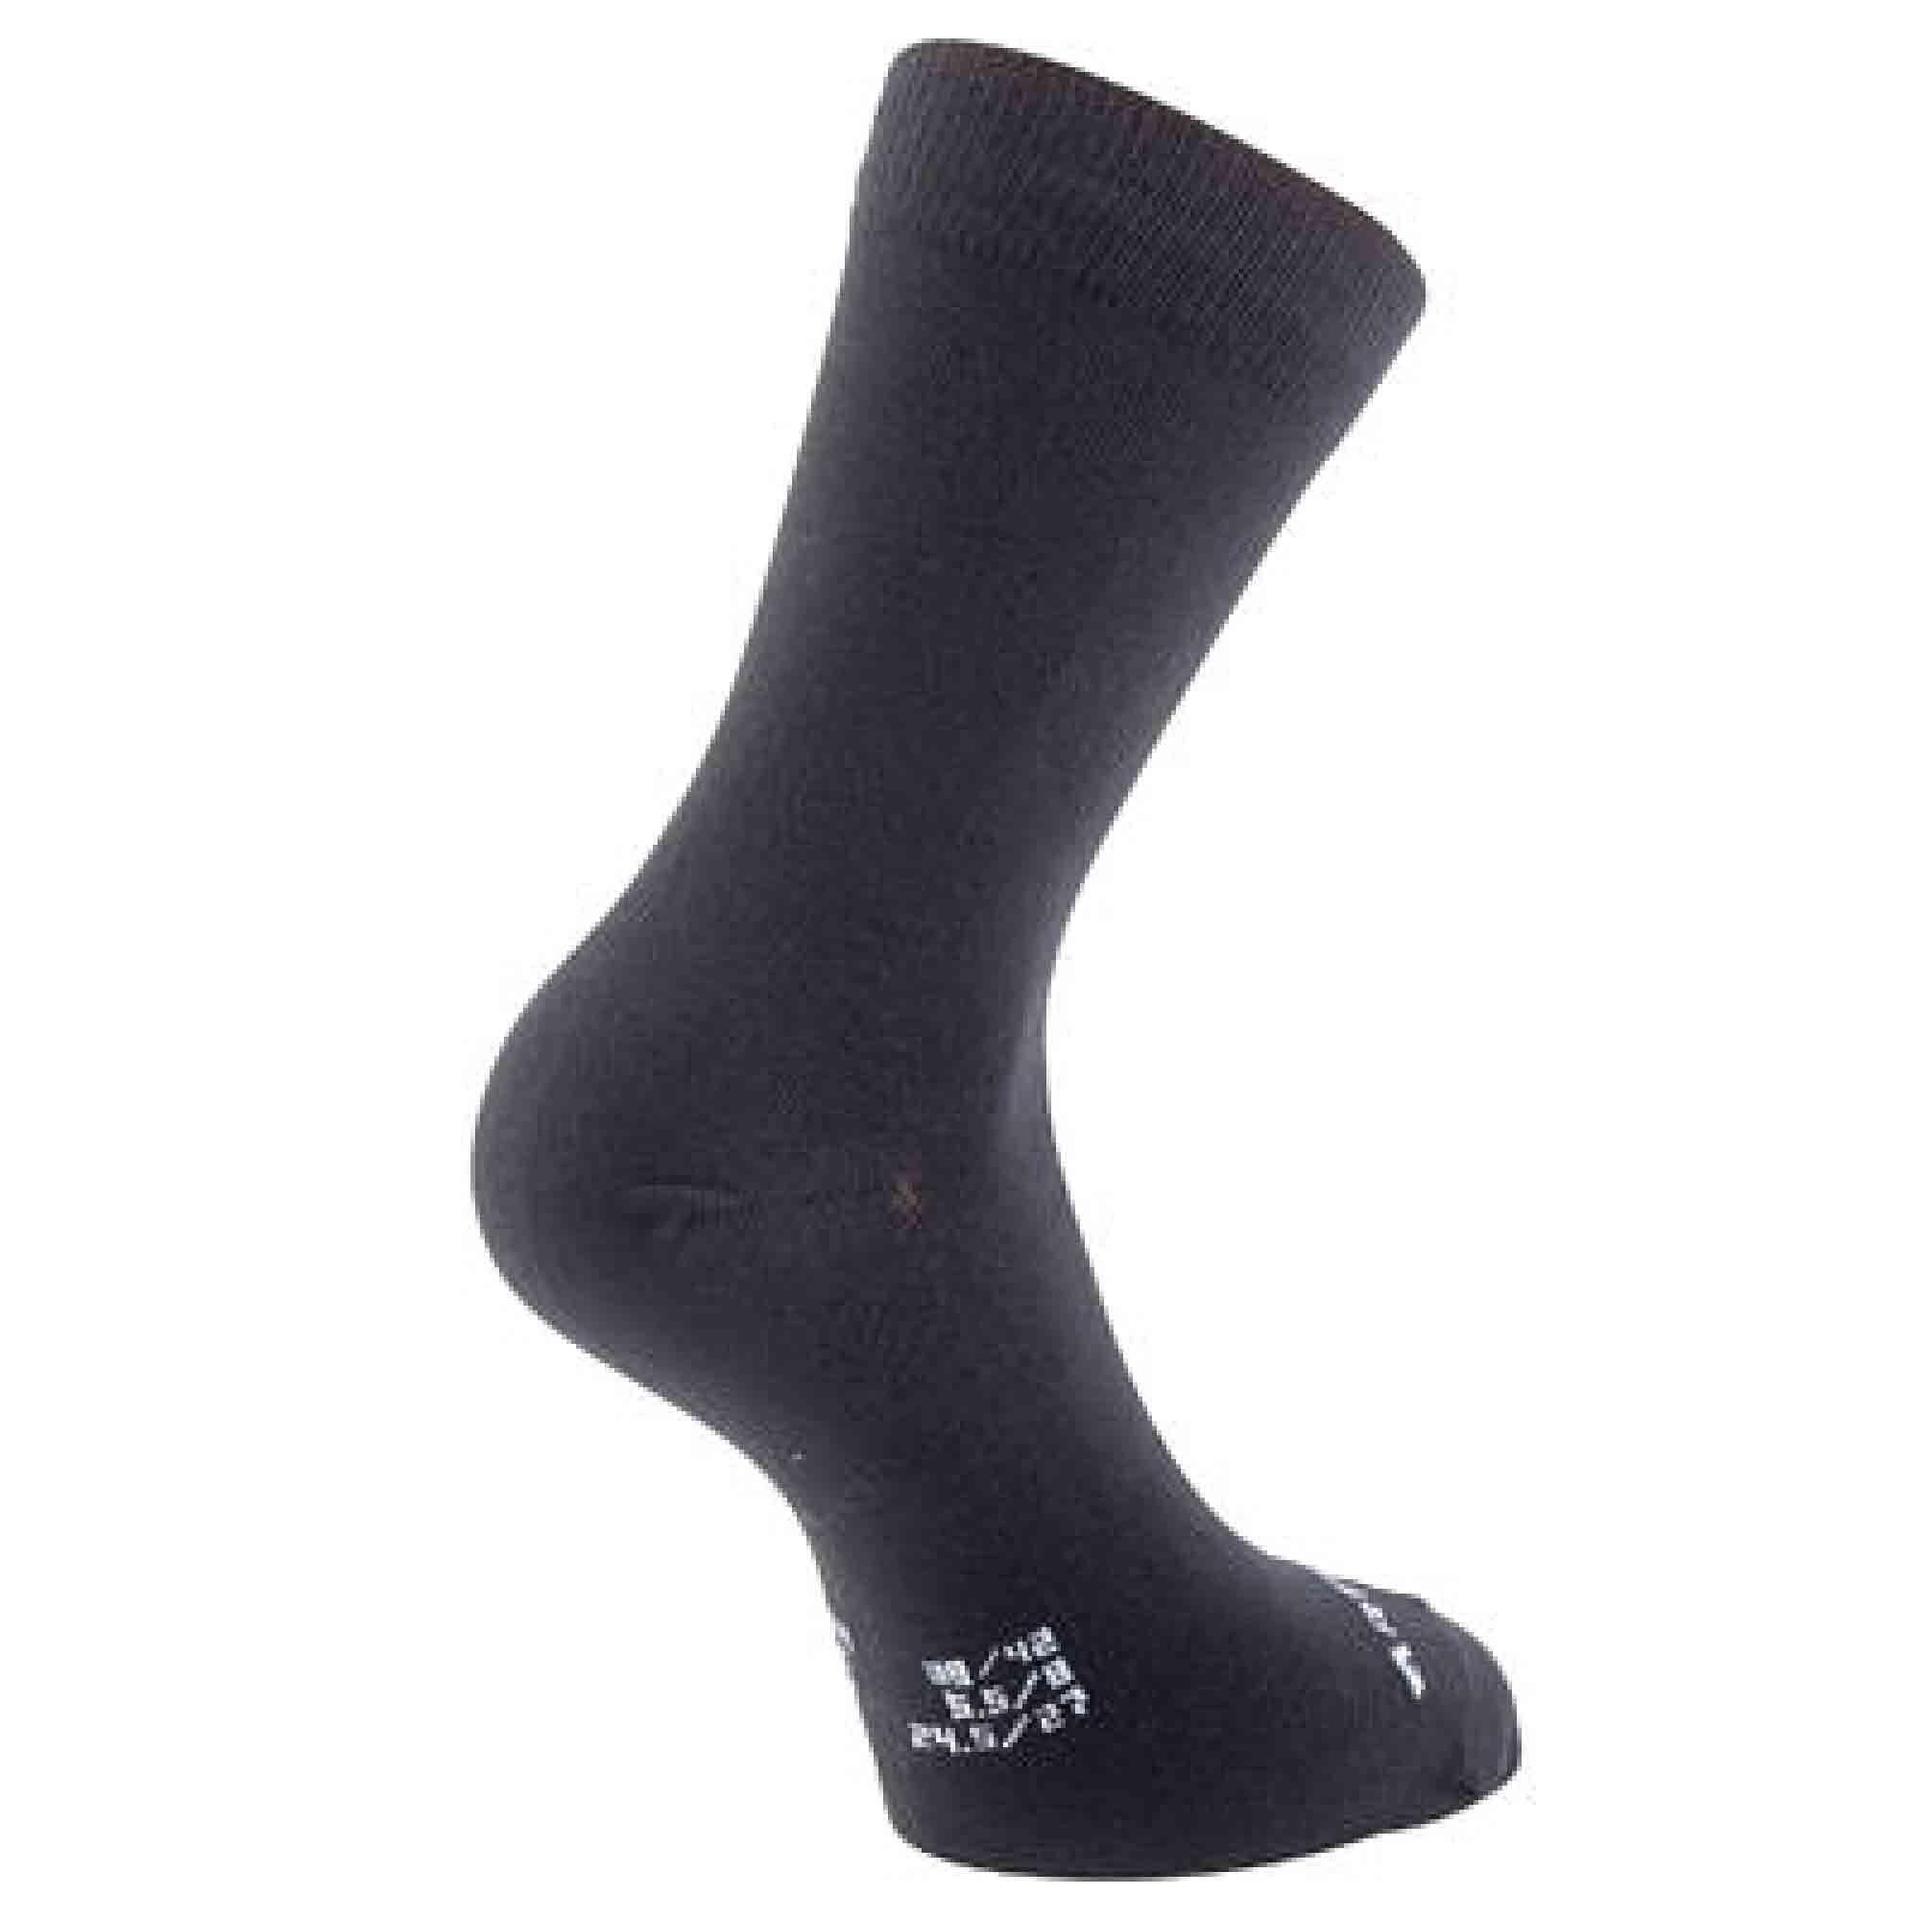 adult tennis socks high ankle x1 - rs160 black